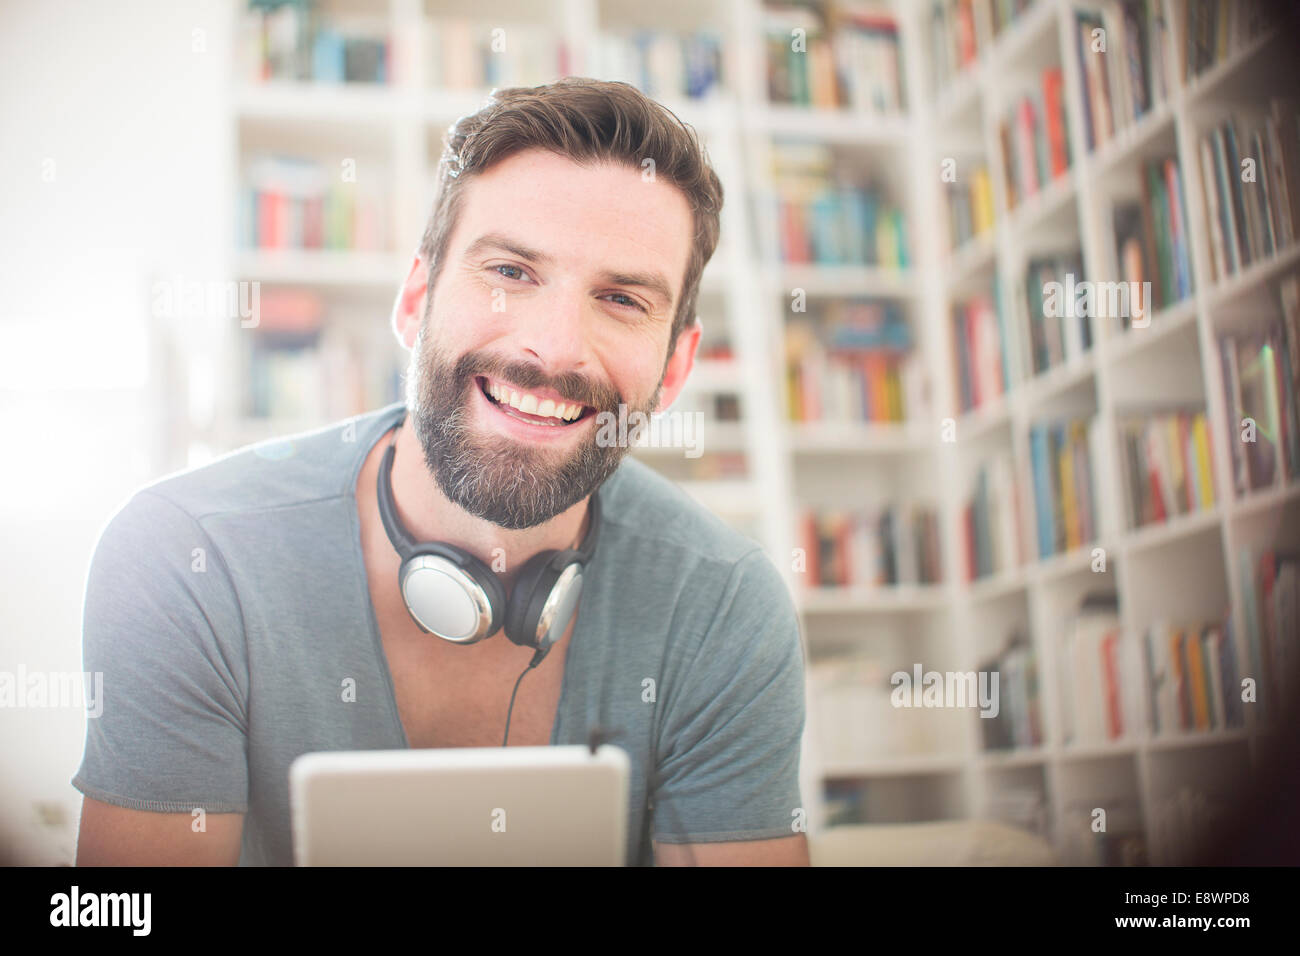 Smiling man using digital tablet in living room Stock Photo